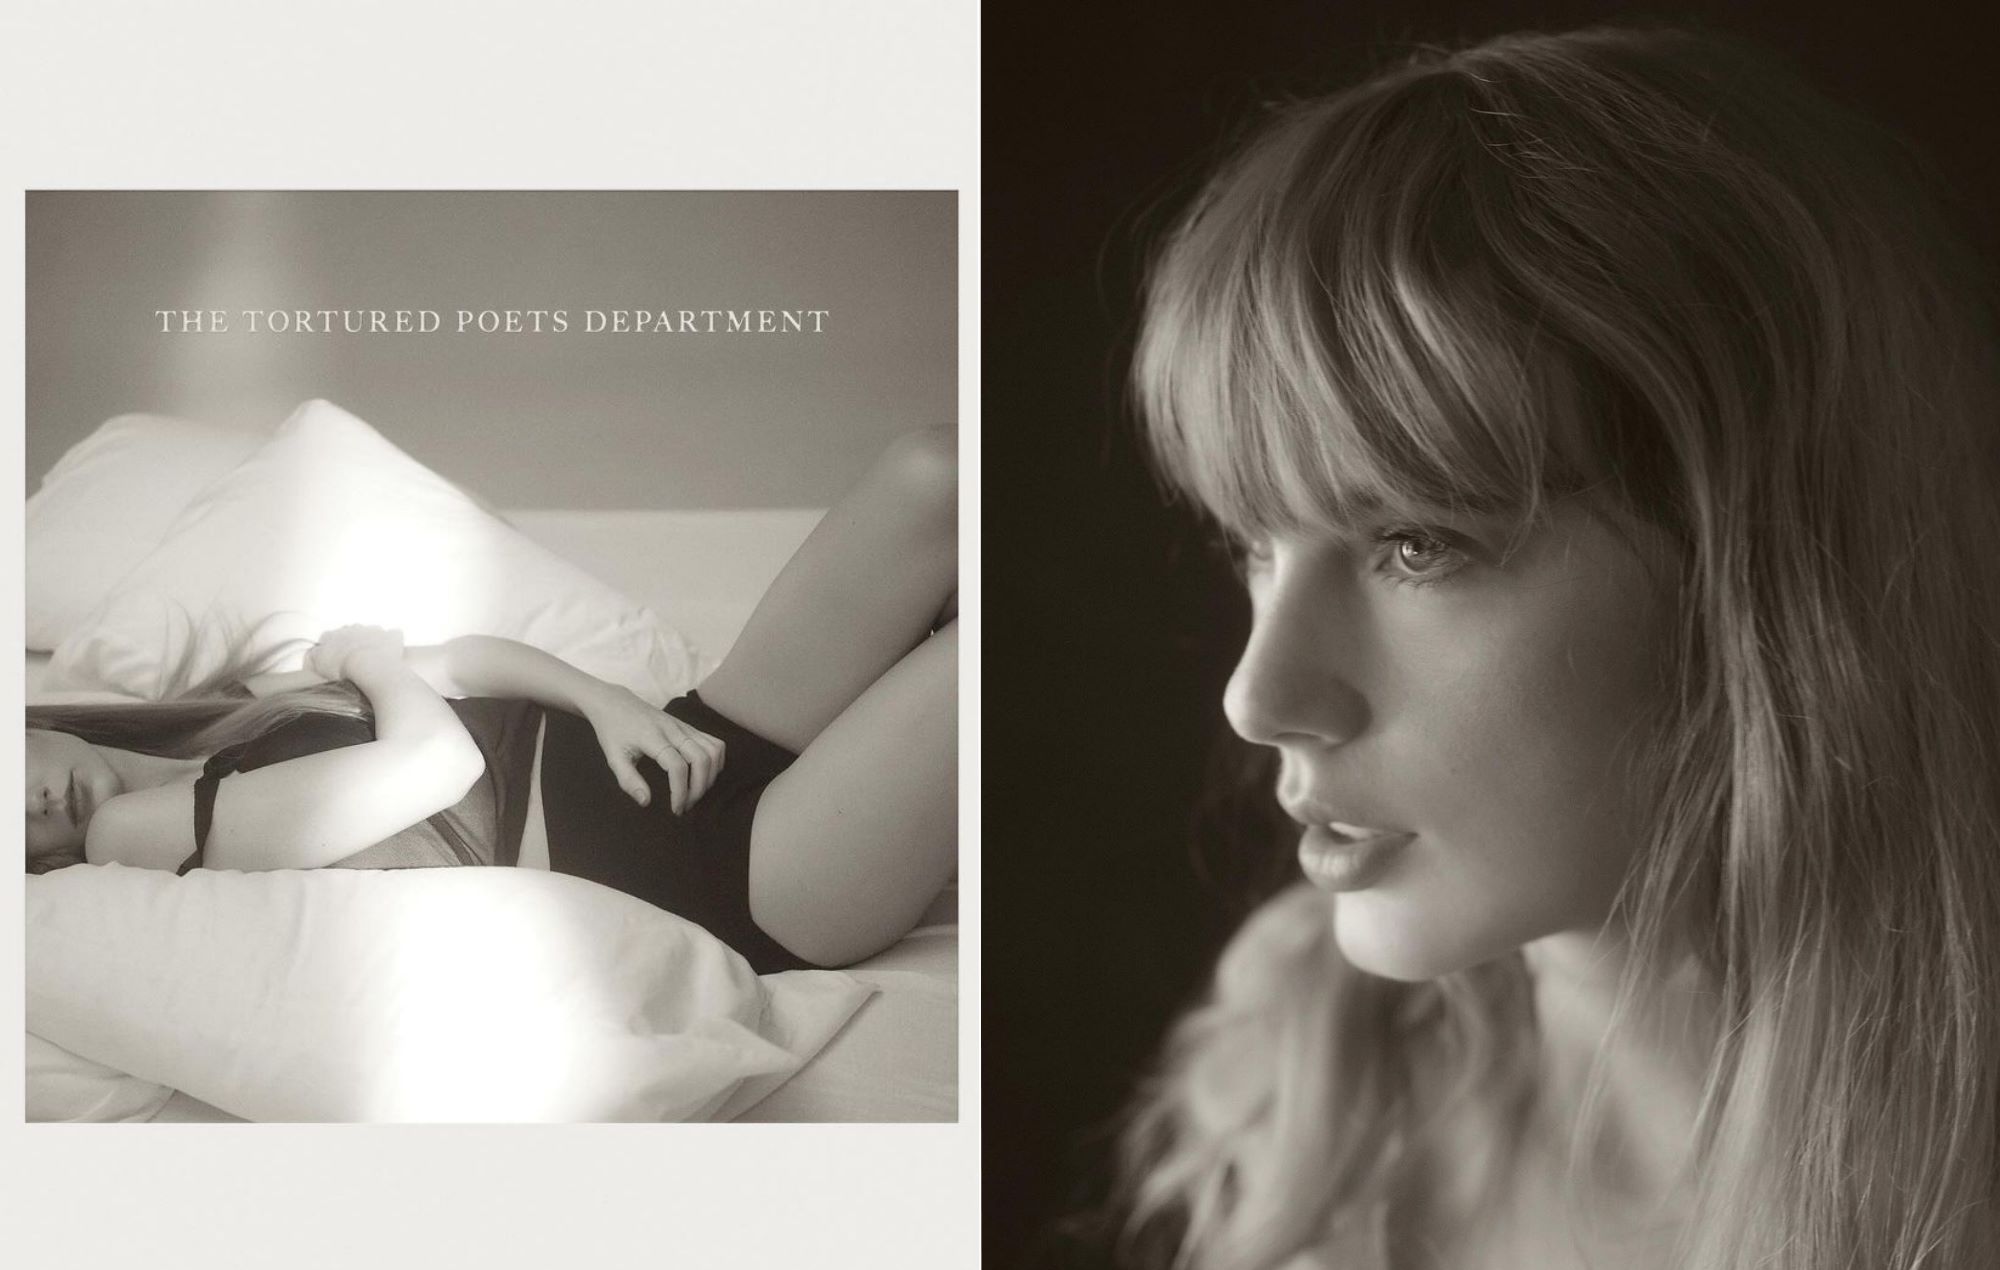 Taylor Swift: Όλα τα τραγούδια του “TTPD” σε μία λίστα κατάταξης